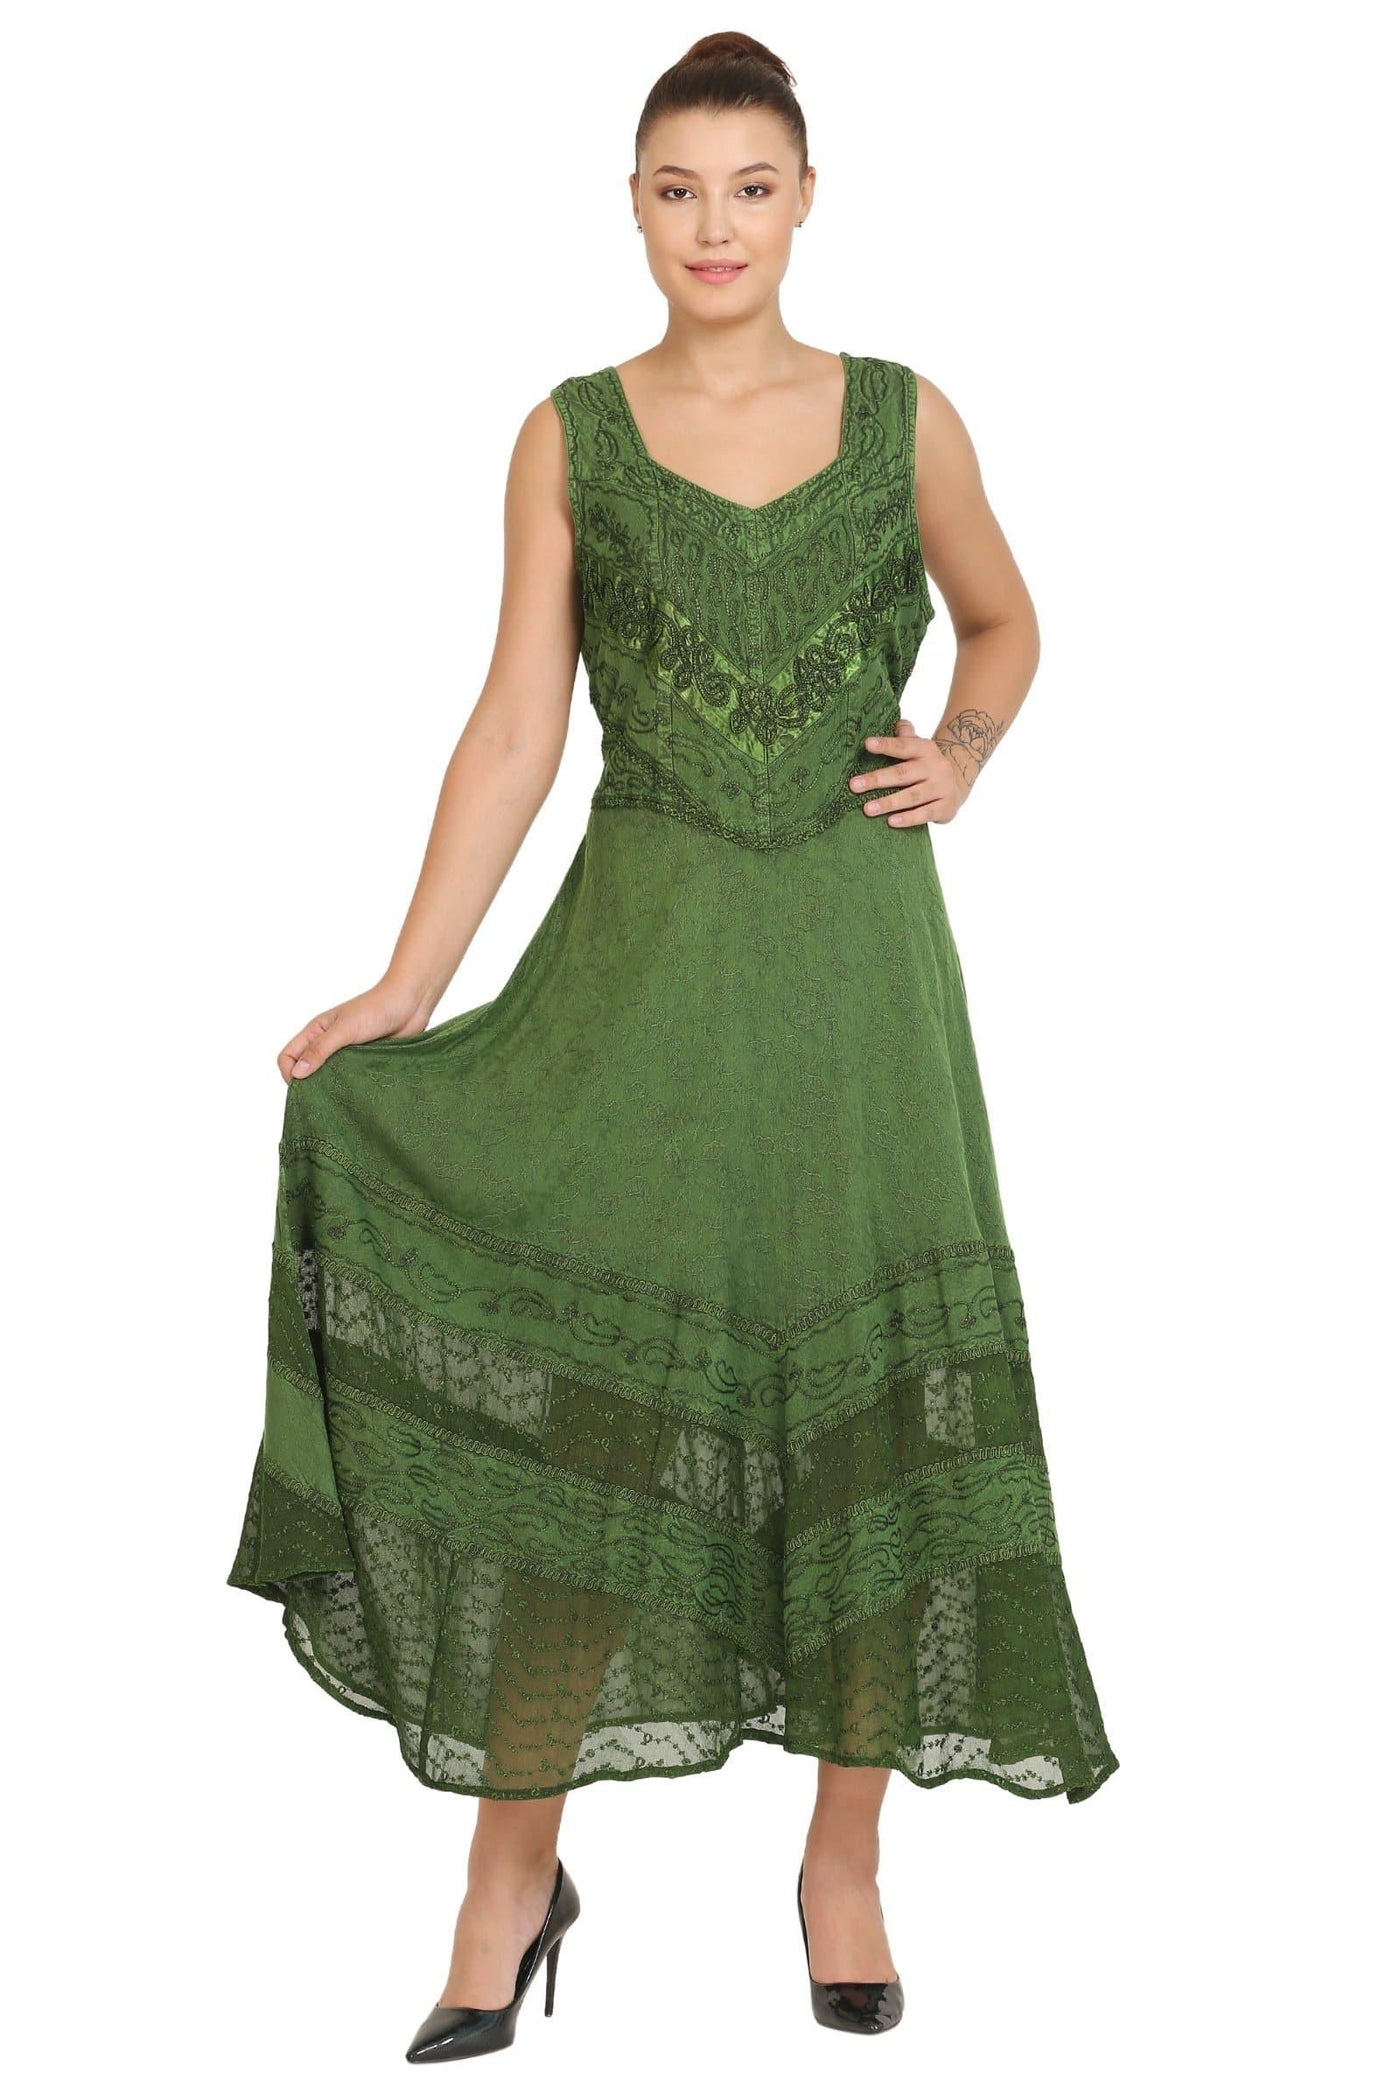 Sleeveless Renaissance Dress Adjustable Back 15225  - Advance Apparels Inc